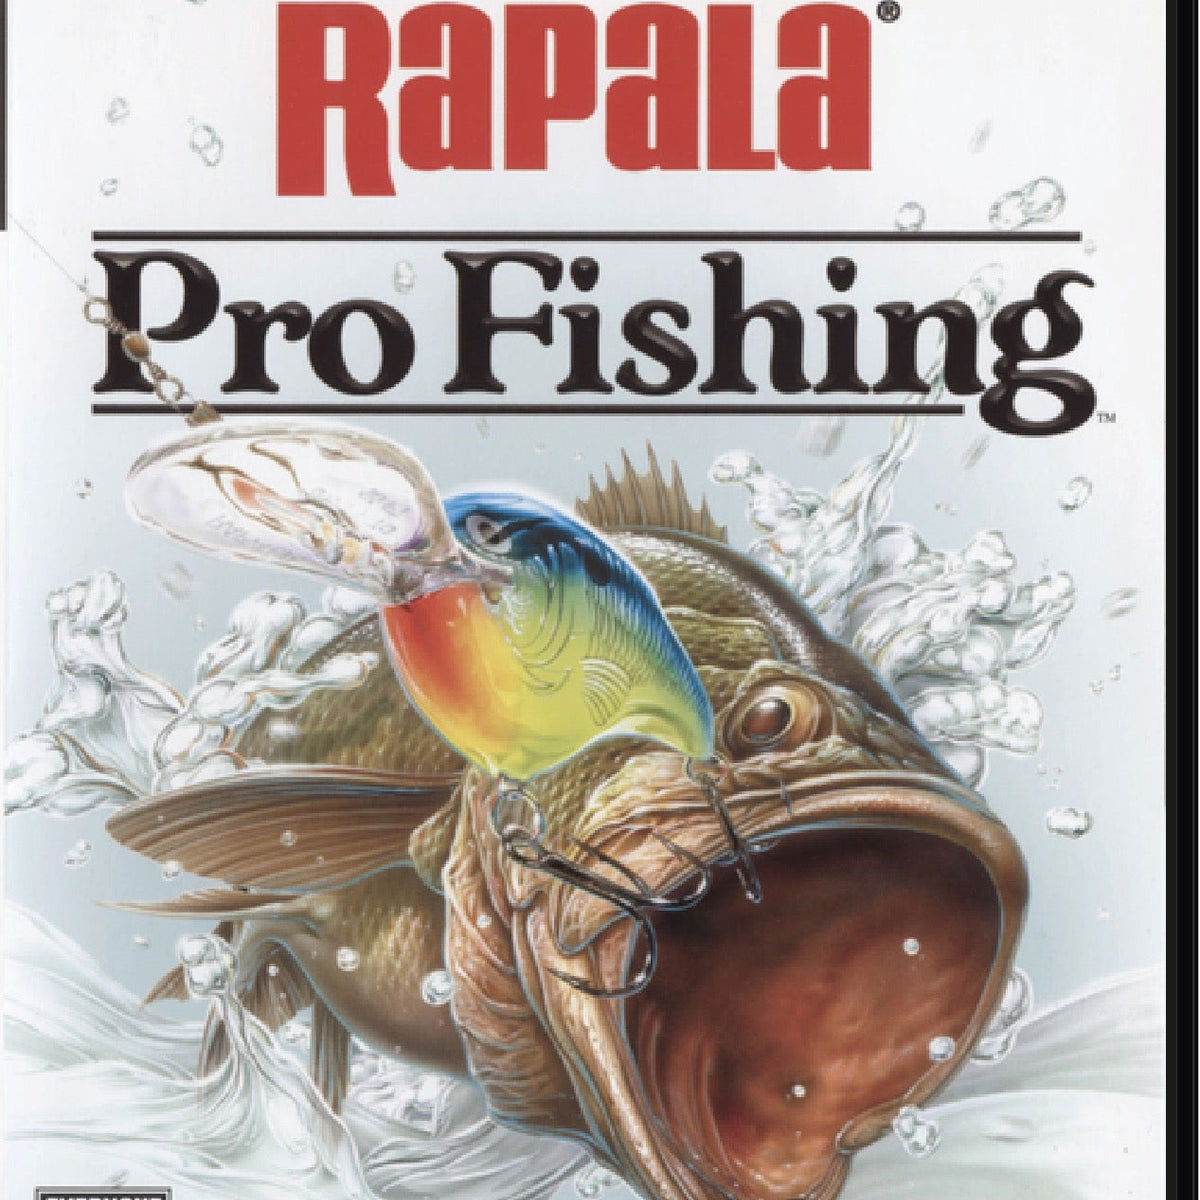 Rapala Pro Fishing for Sony PlayStation 2 (PS2)